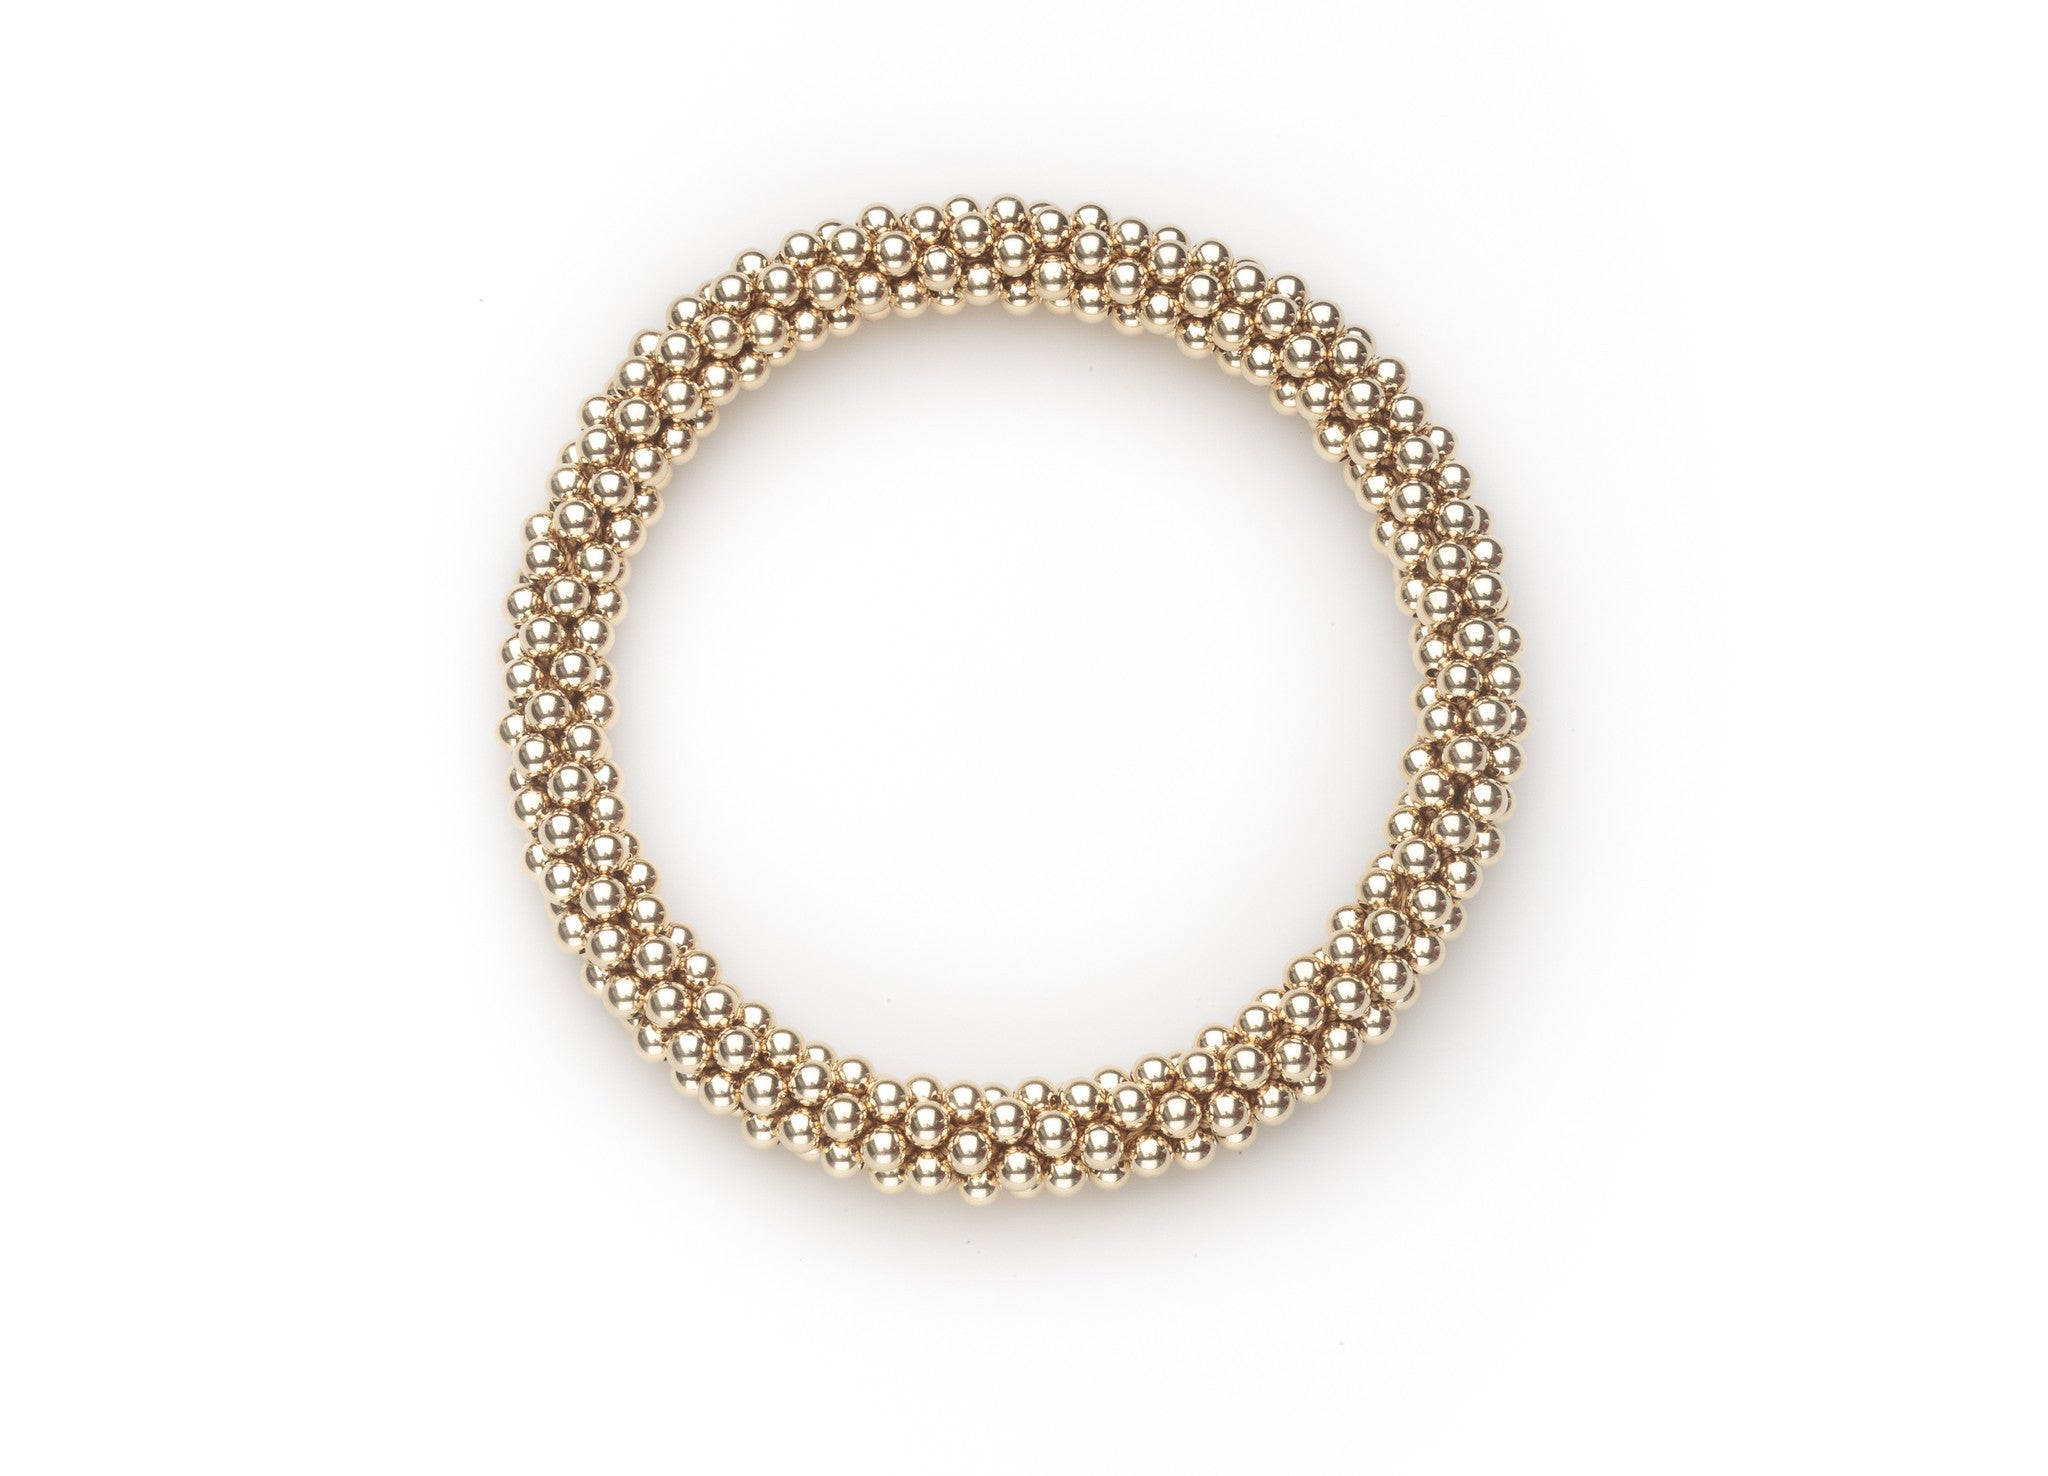 Gold Cluster Bracelet - 3mm Beads